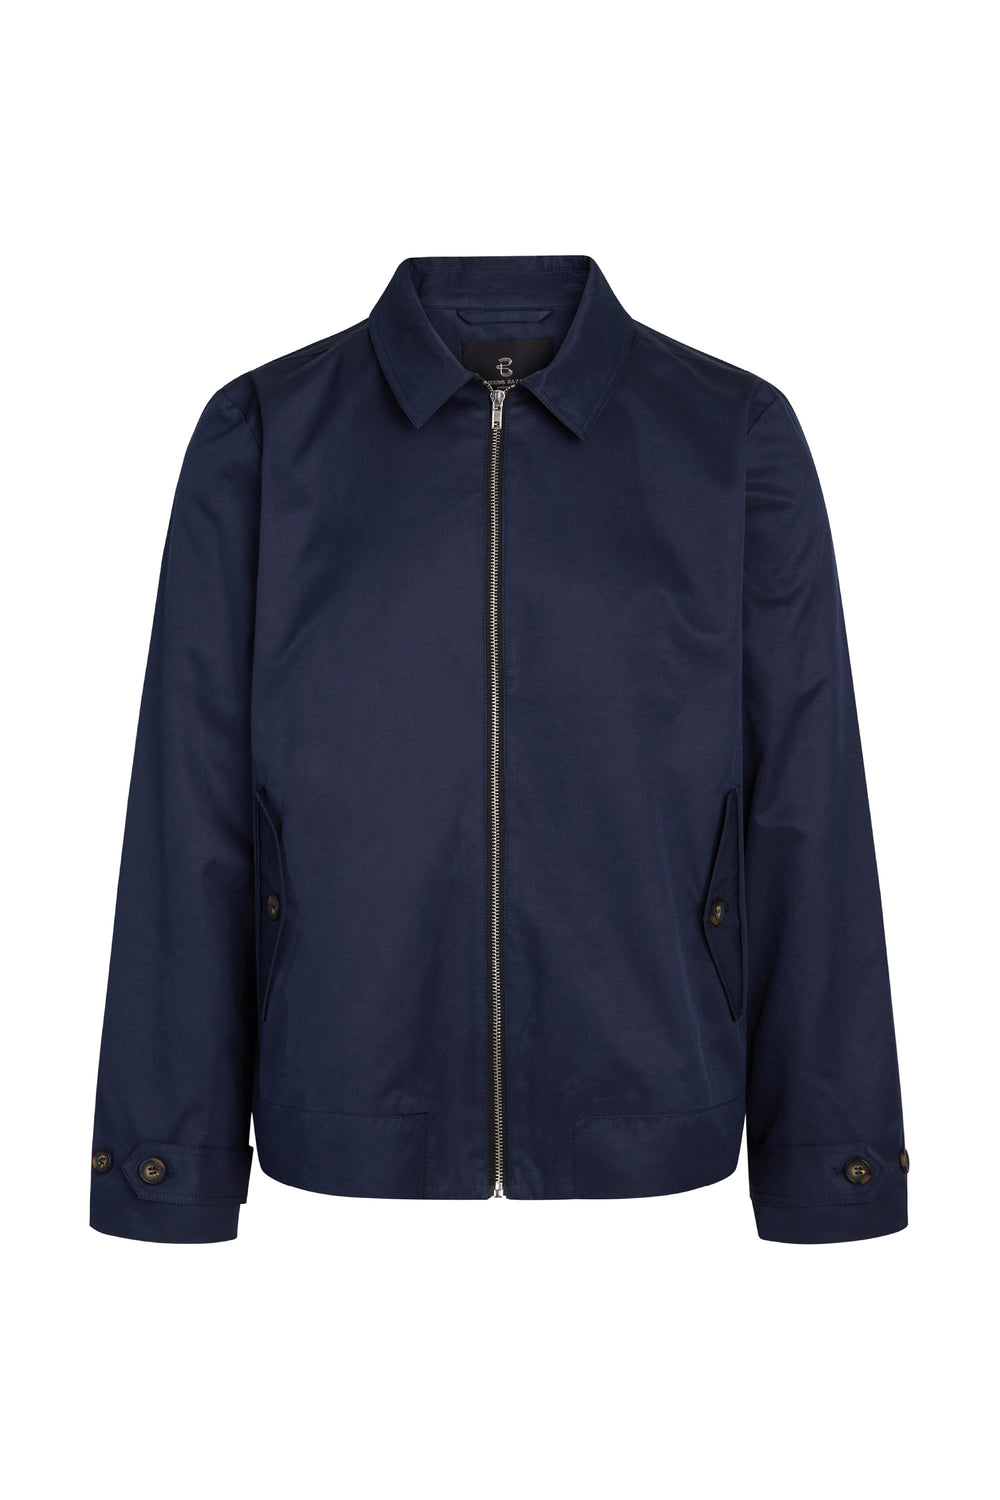 Bruuns Bazaar Men AutreBBJules jacket Outerwear Navy